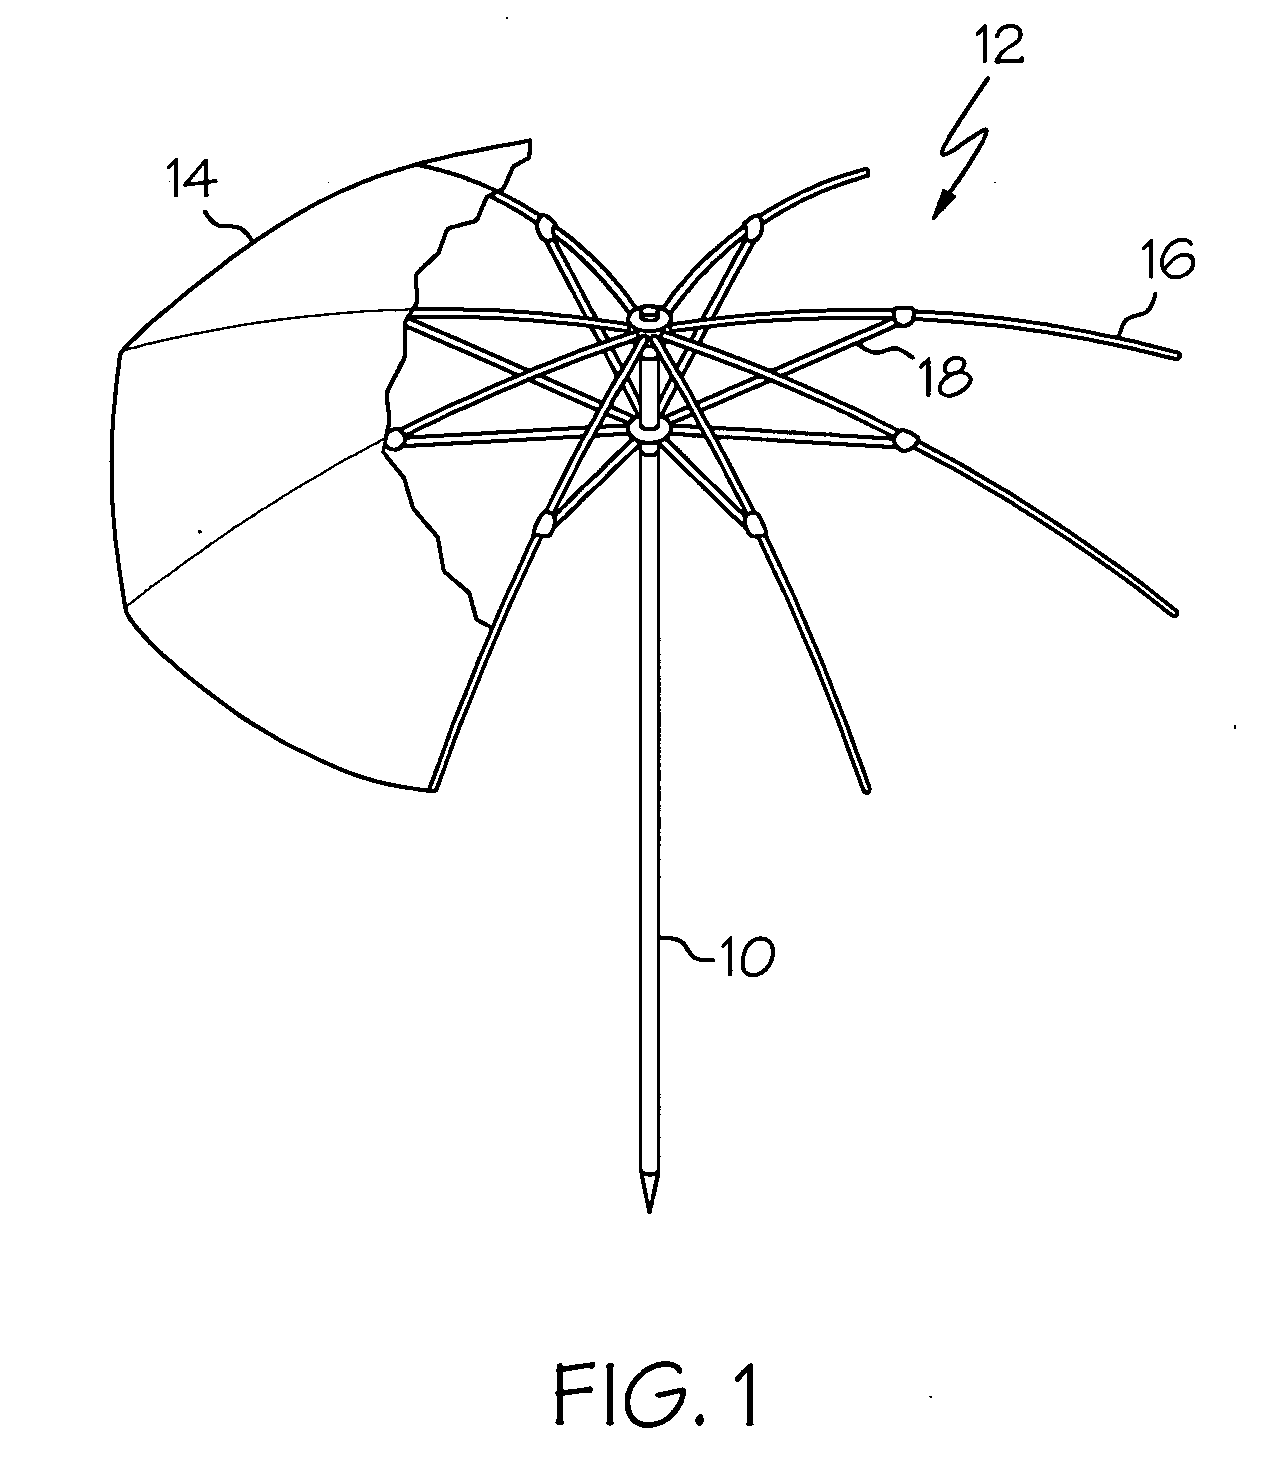 Umbrella with improved hub